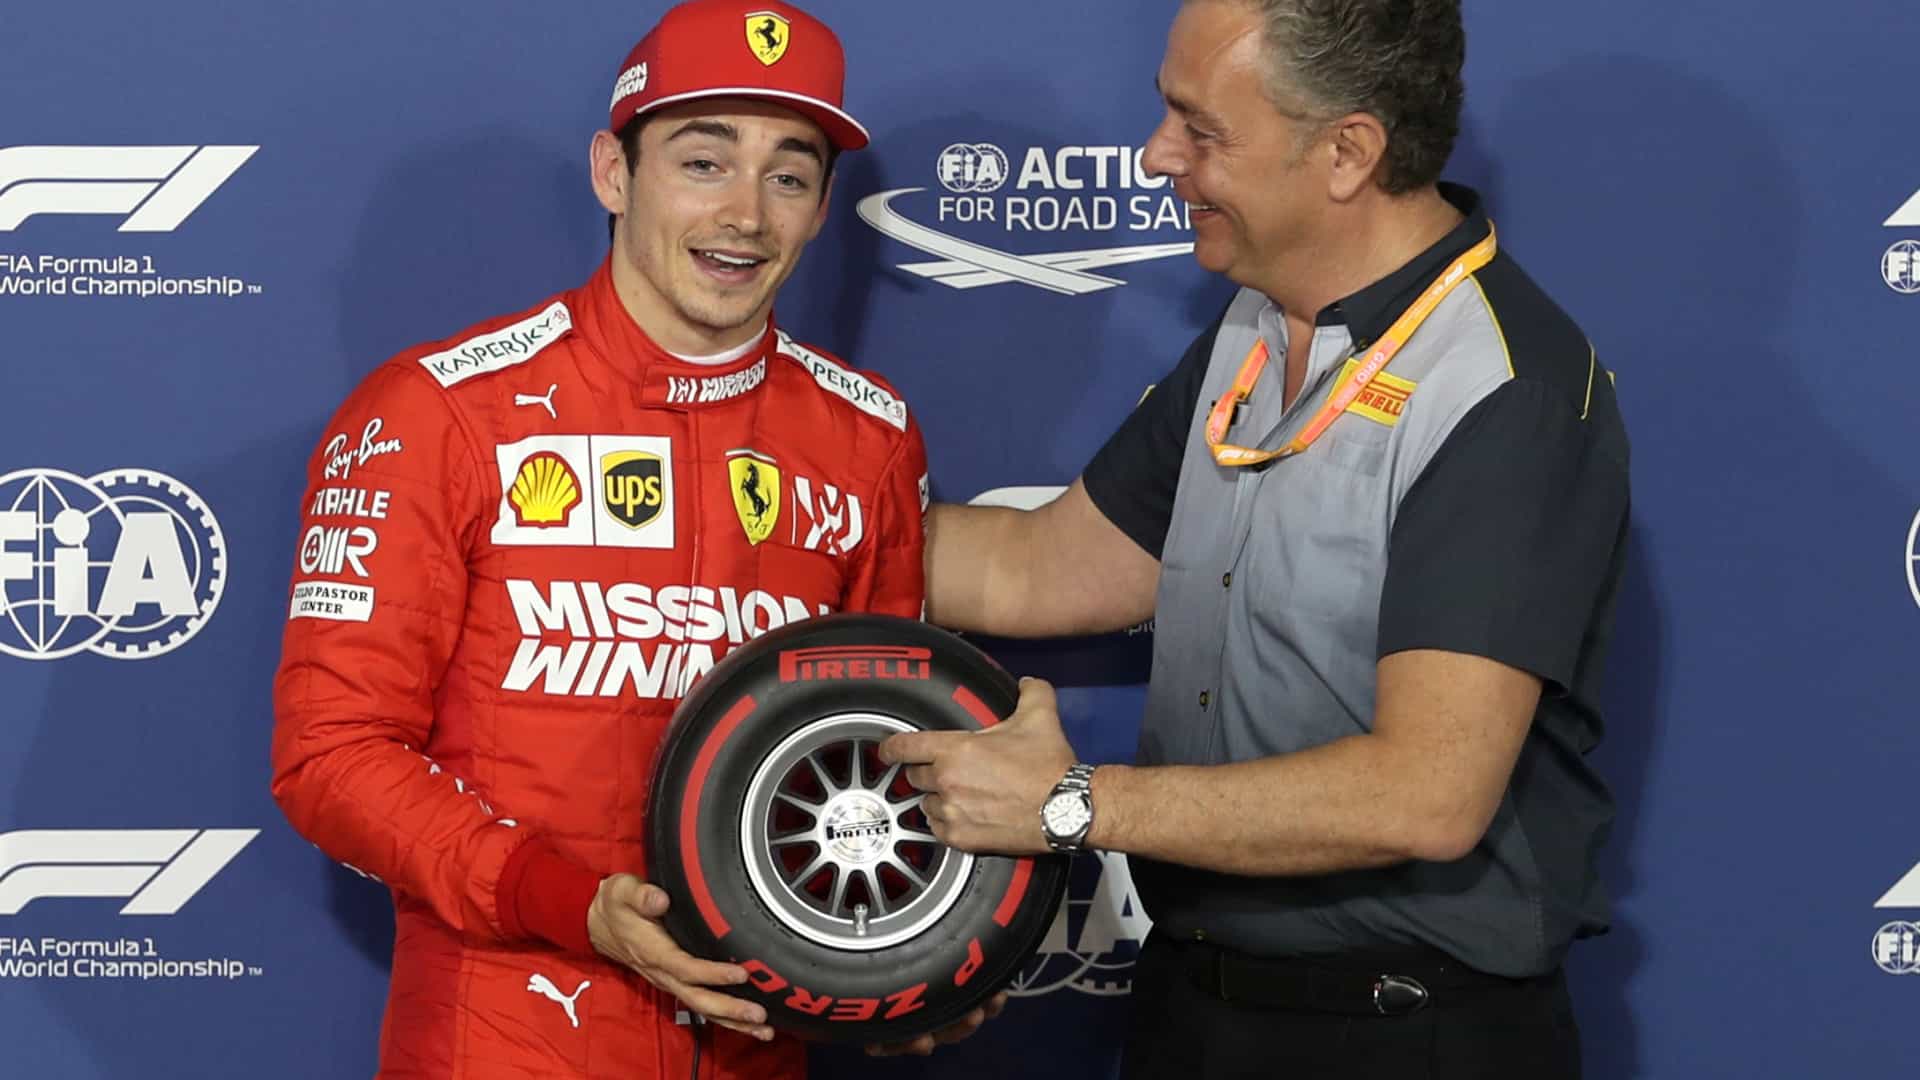 Destaque da F-1, Leclerc renova contrato com a Ferrari